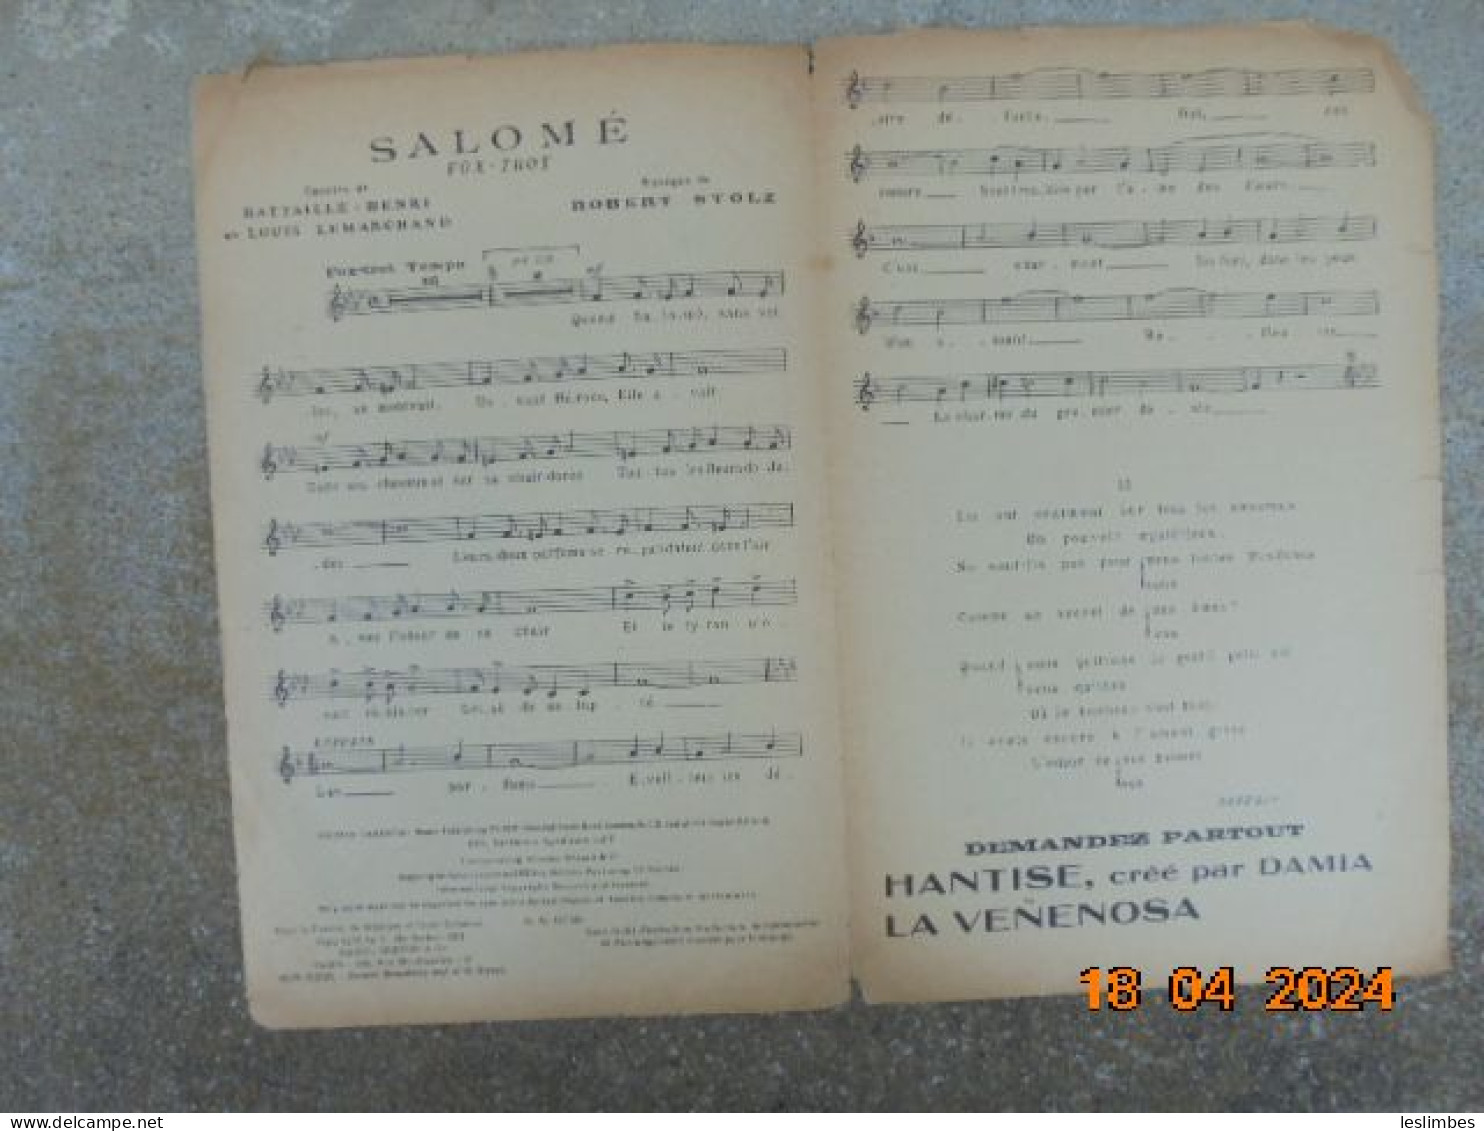 Salome [partition] Fox-Trot - Battaille Henri, Robert Stolz - Raoul Breton & Cie - Partituren